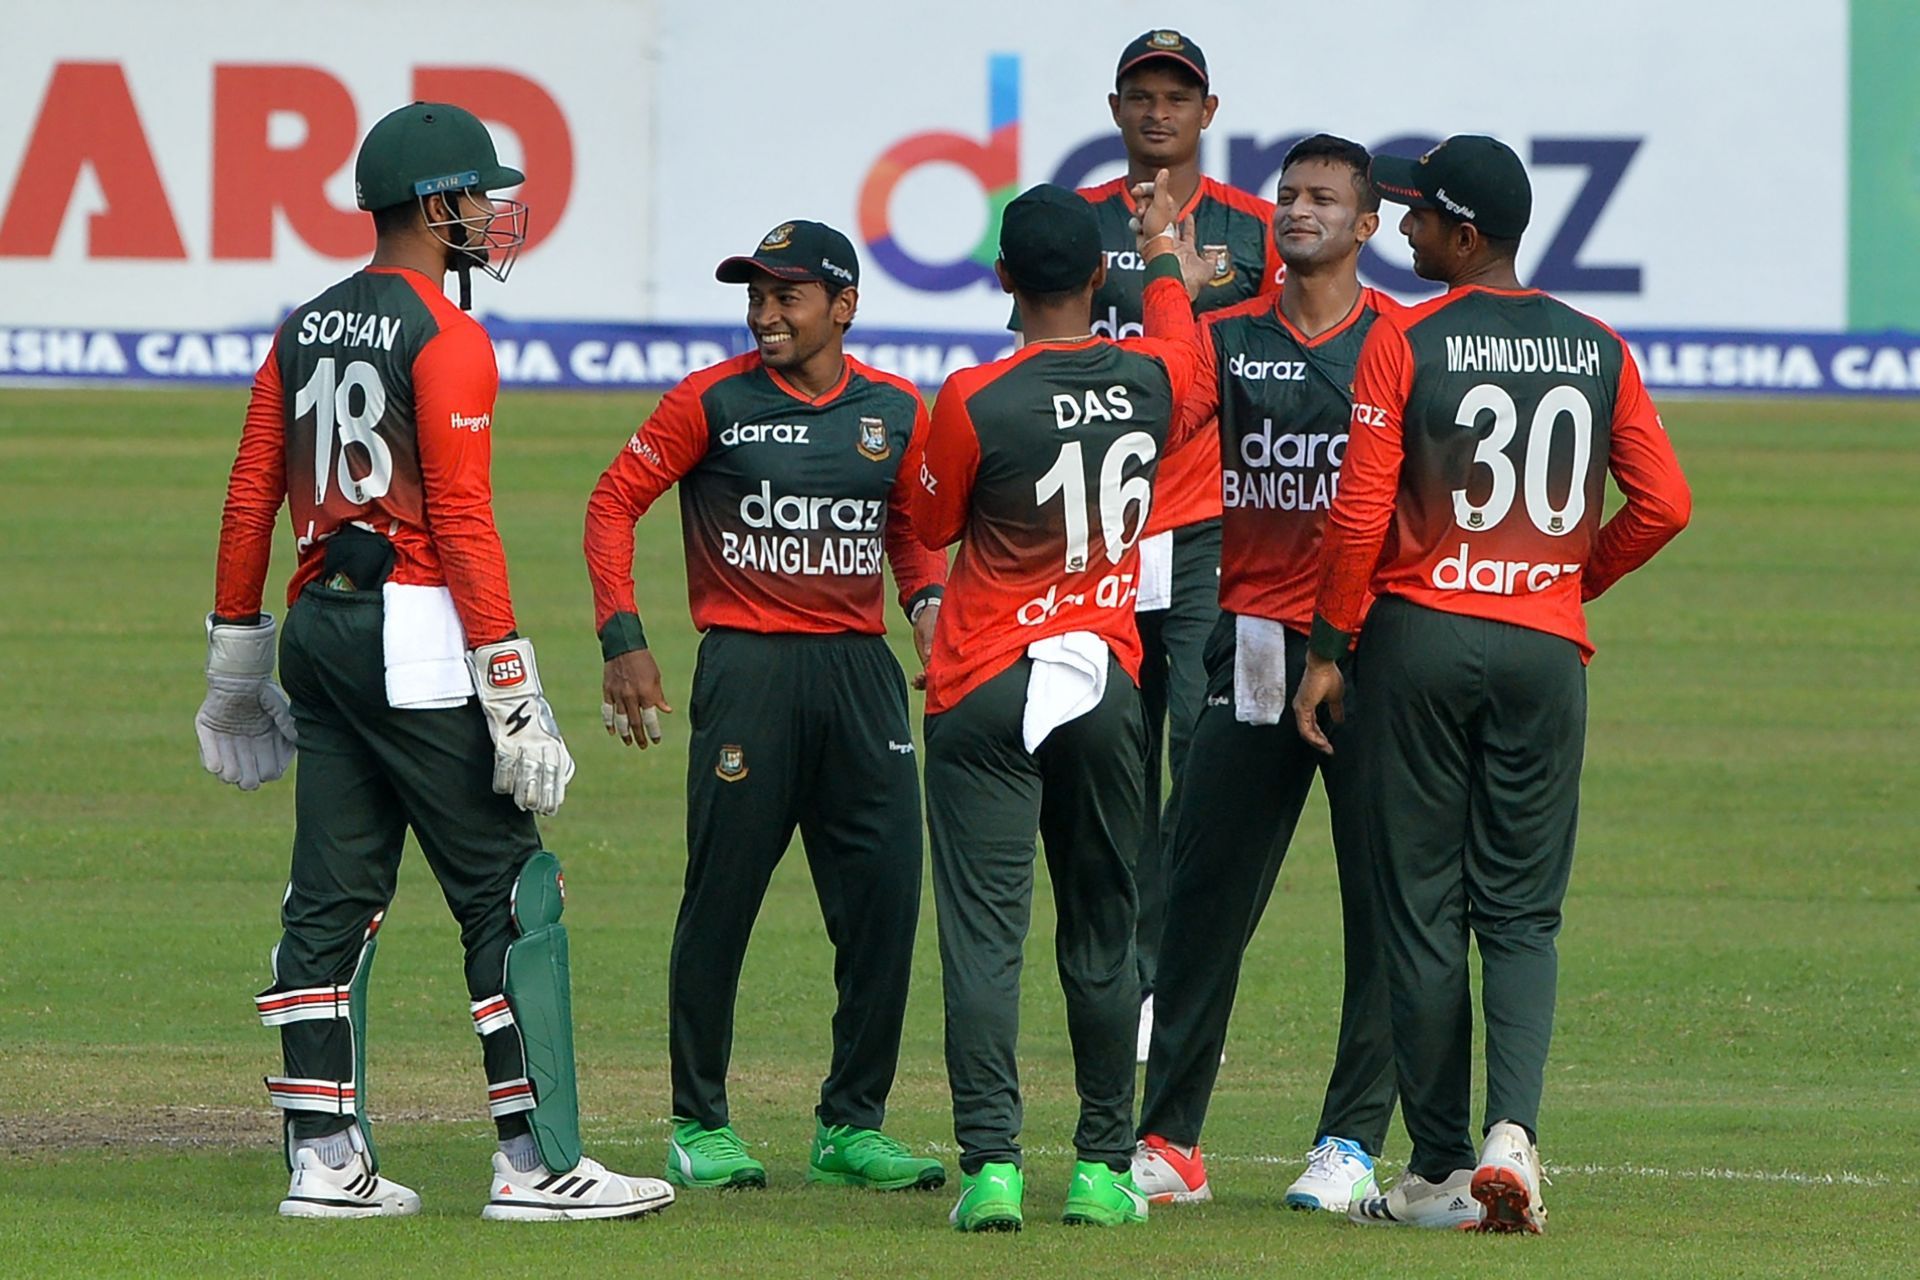 Bangladesh Cricket Team in action (Image courtesy: ICC Cricket)